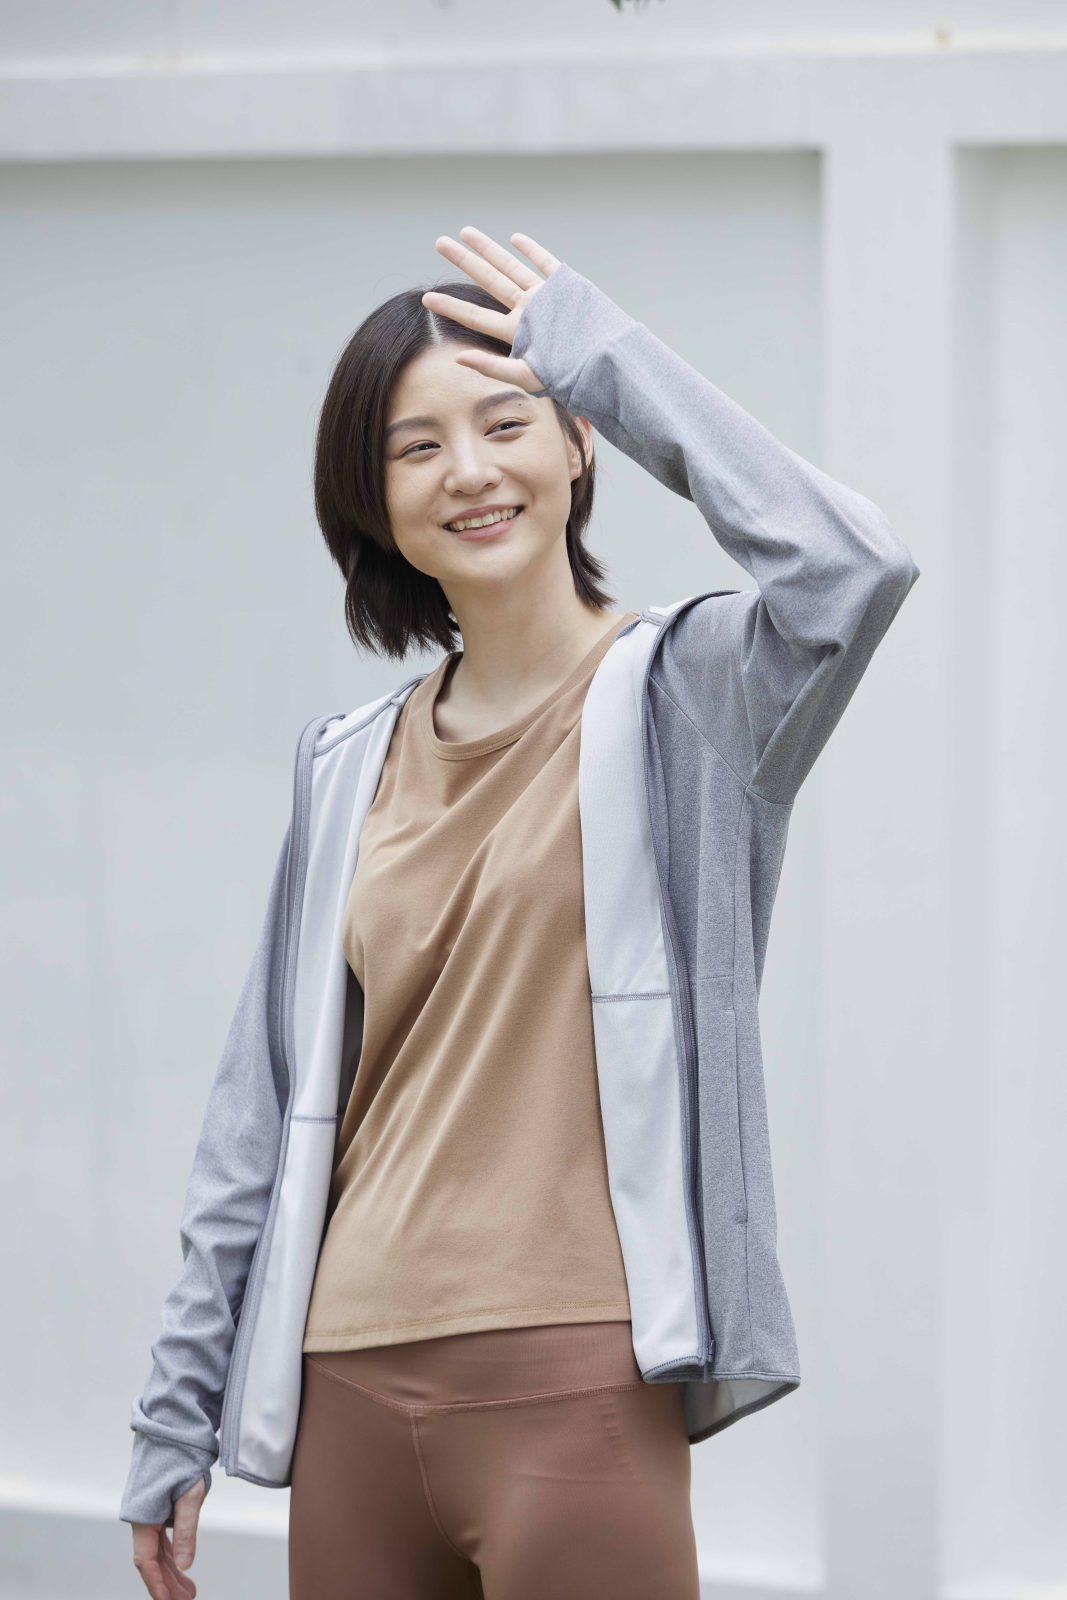 MUJI เปิดตัวเสื้อผ้าคอลเลคชันใหม่ งานดีไซน์และเนื้อผ้าตามภูมิอากาศ ราคาสบายกระเป๋า แต่คงคุณภาพมาตรฐานญี่ปุ่น เอาใจสายมินิมัลลิสท์แฟชั่น￼